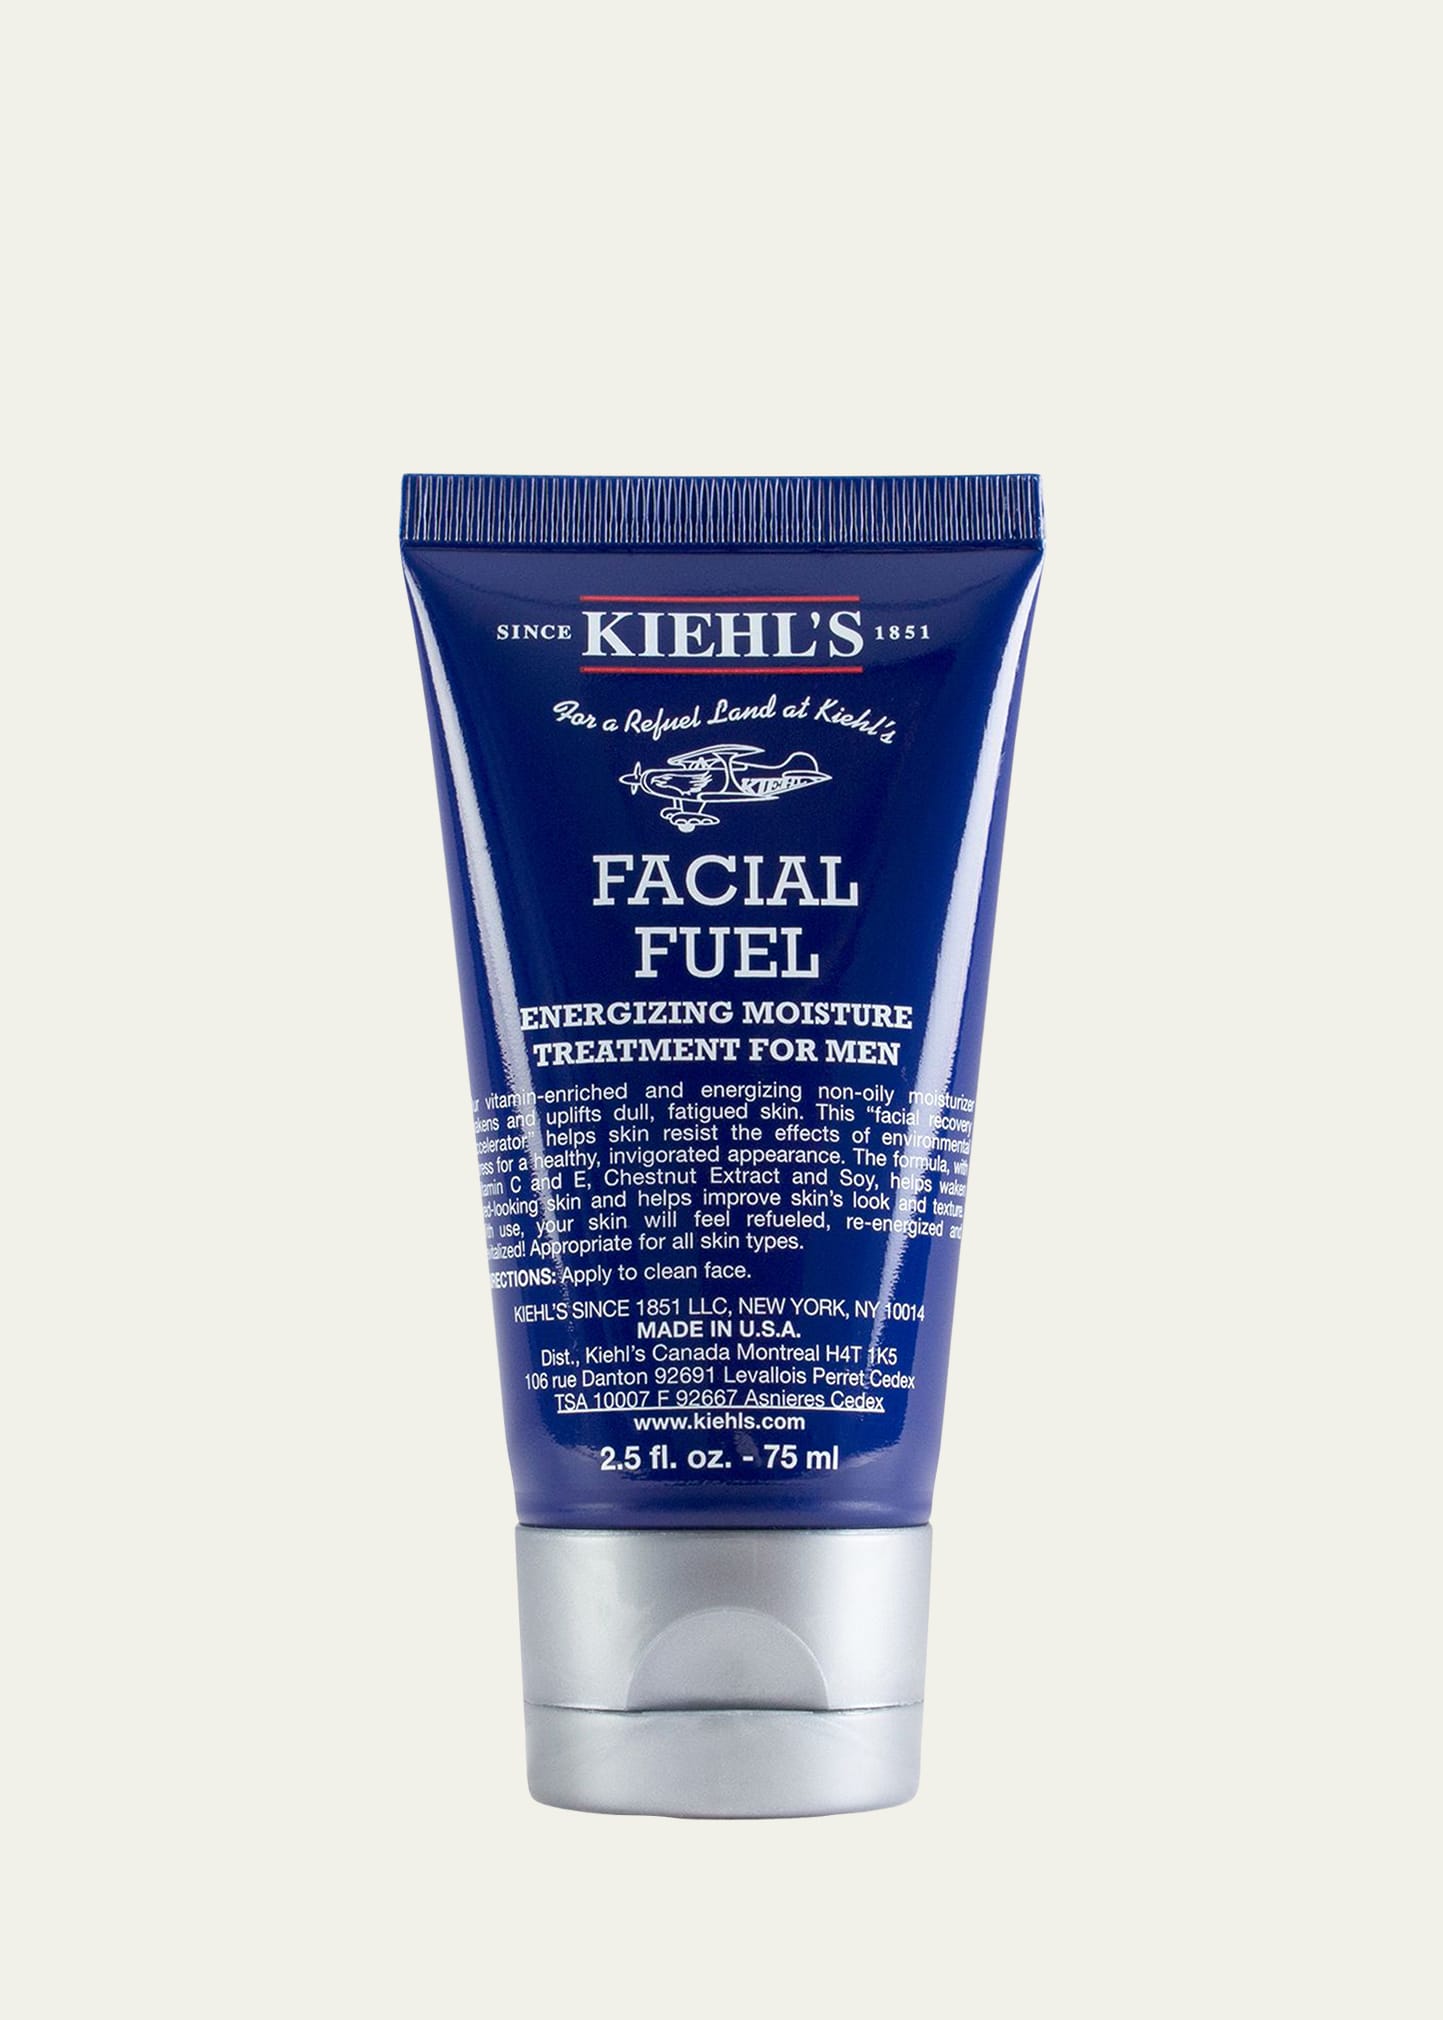 Facial Fuel Daily Energizing Moisture Treatment For Men, 2.5 oz.